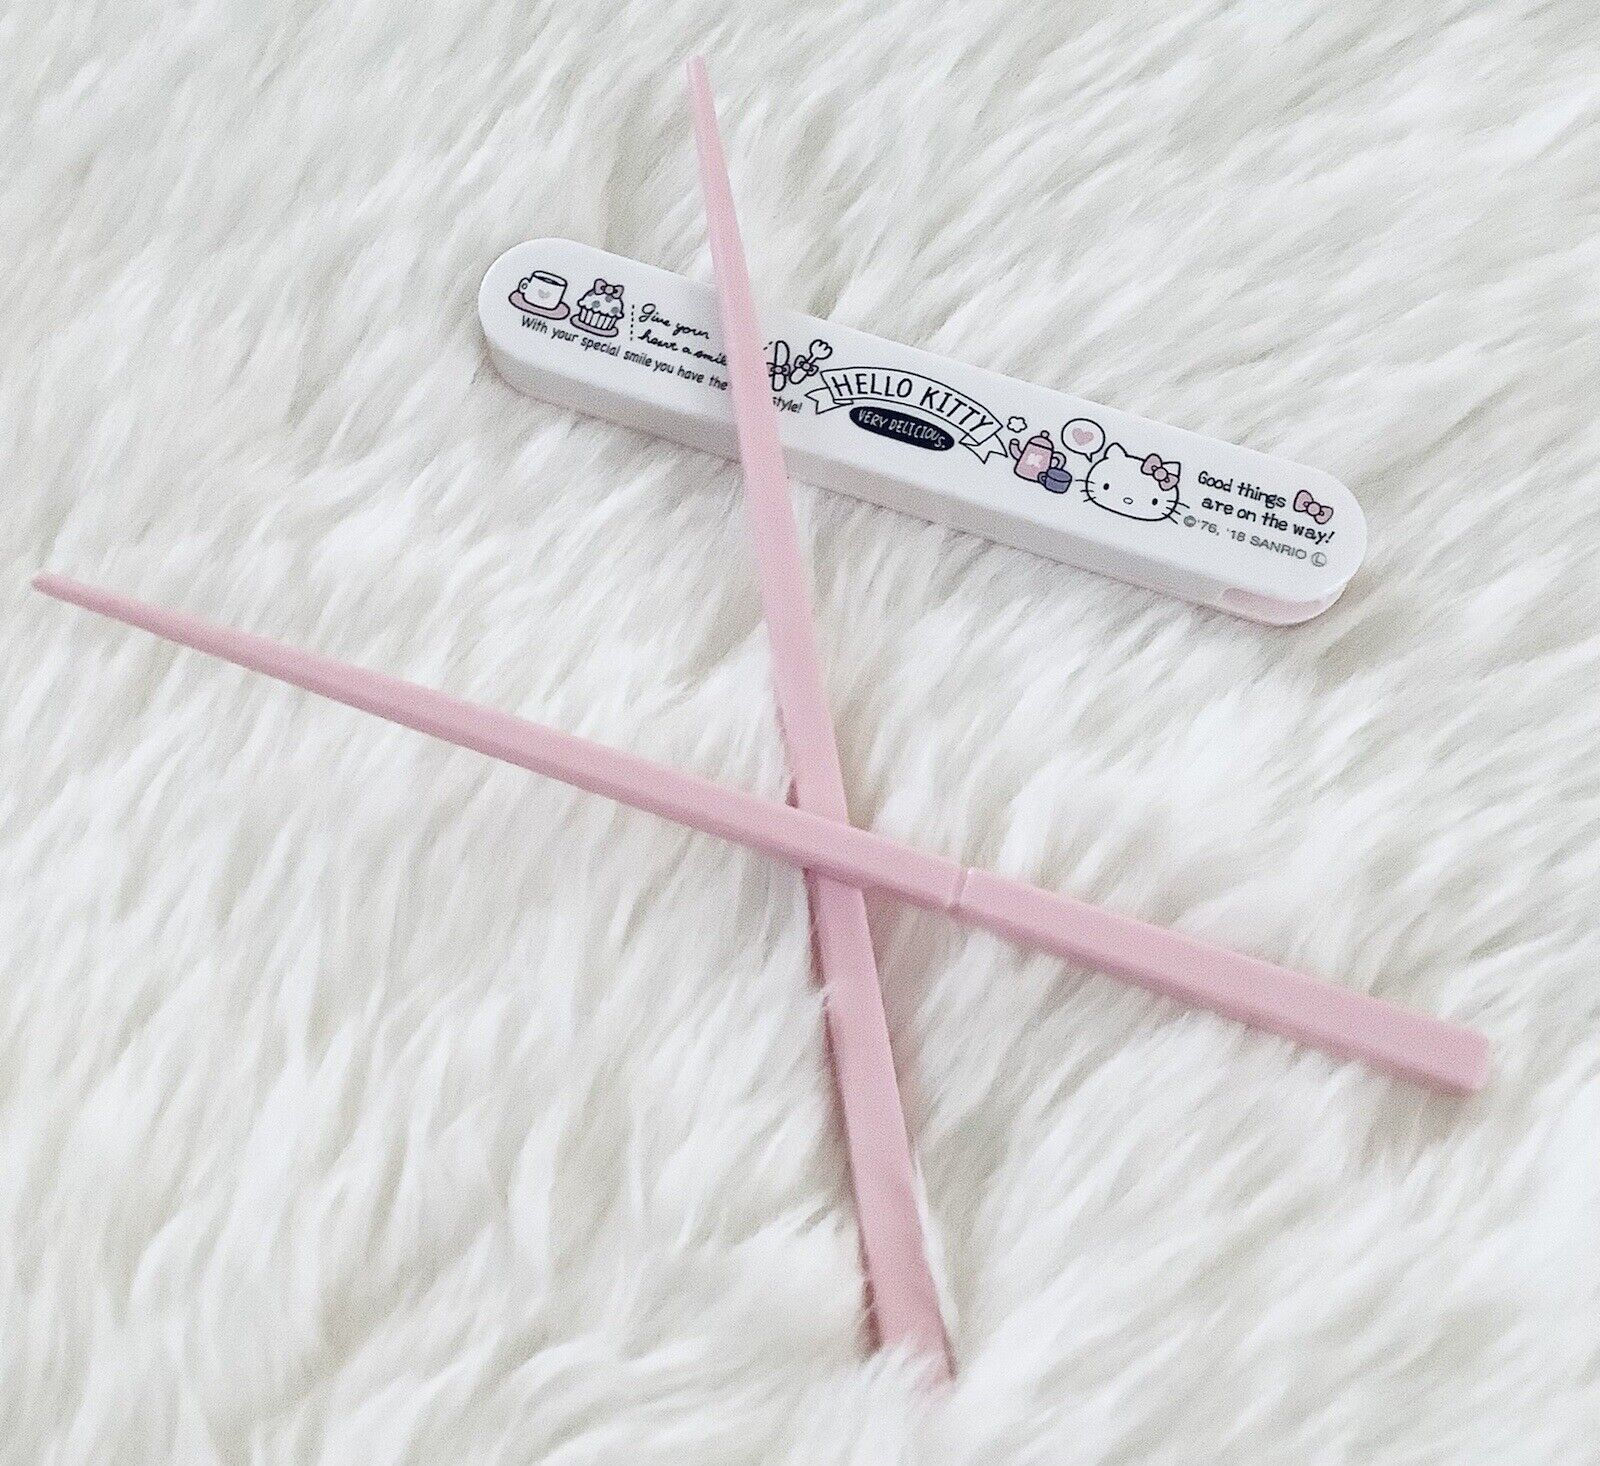 Chopsticks - Sanrio Hello Kitty with Case 18cm (Taiwan Edition)